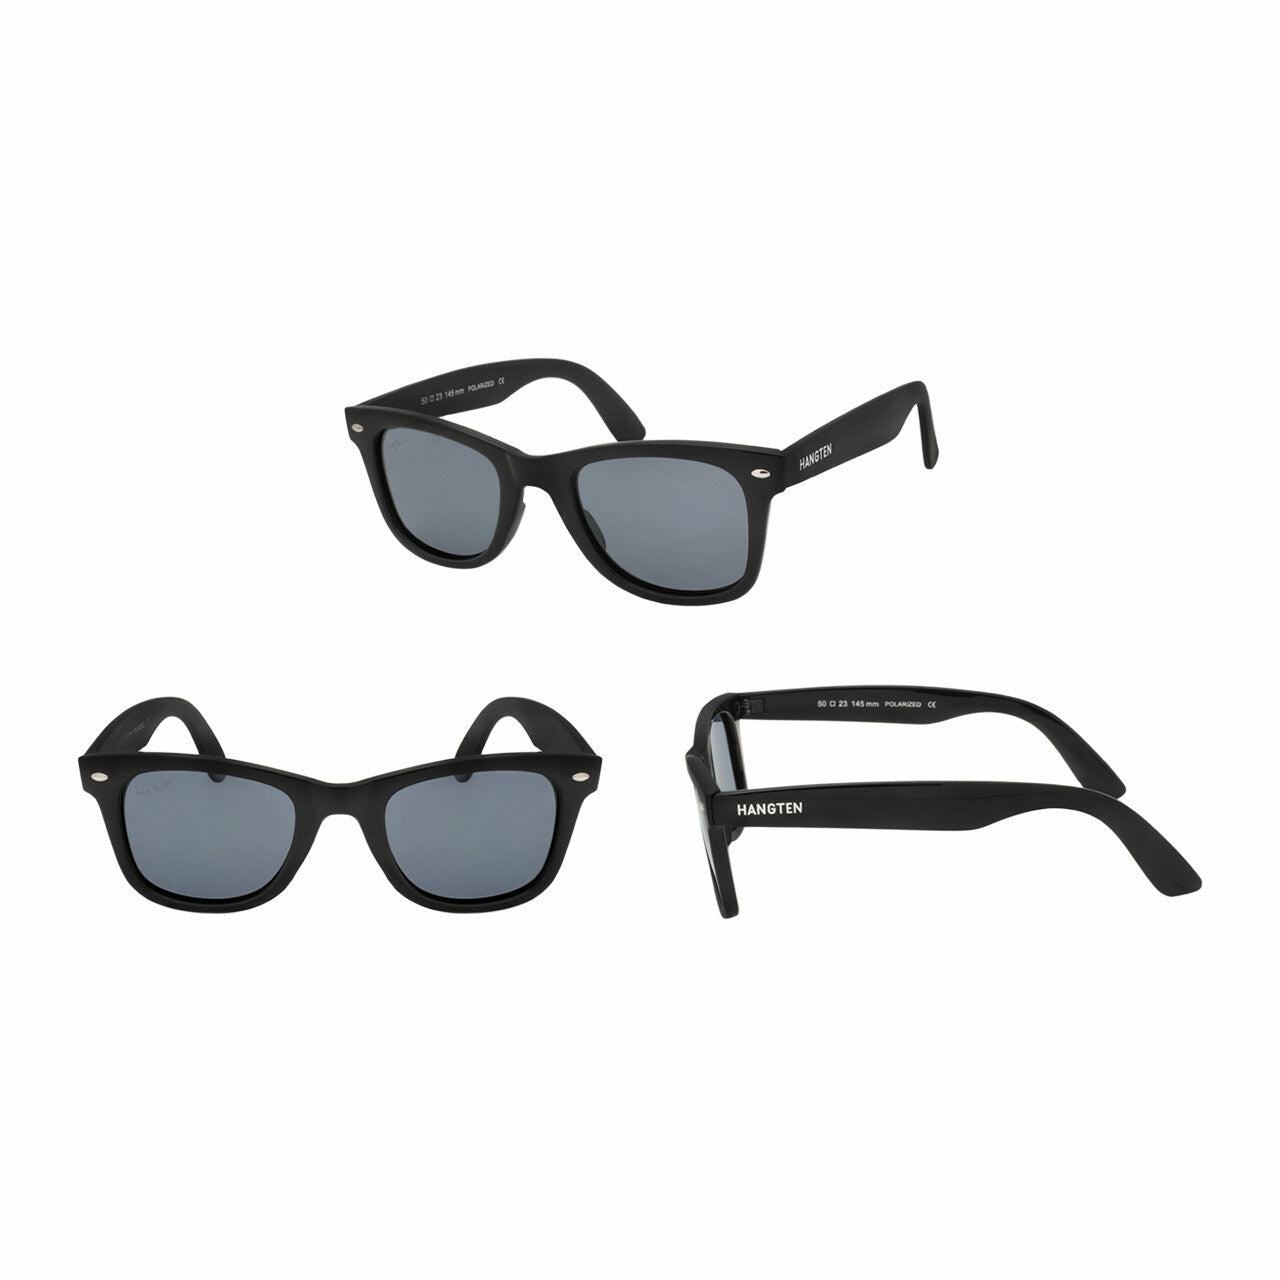 Hang Square Frame Polycarbonate UV400 Polarized Square Sunglasses